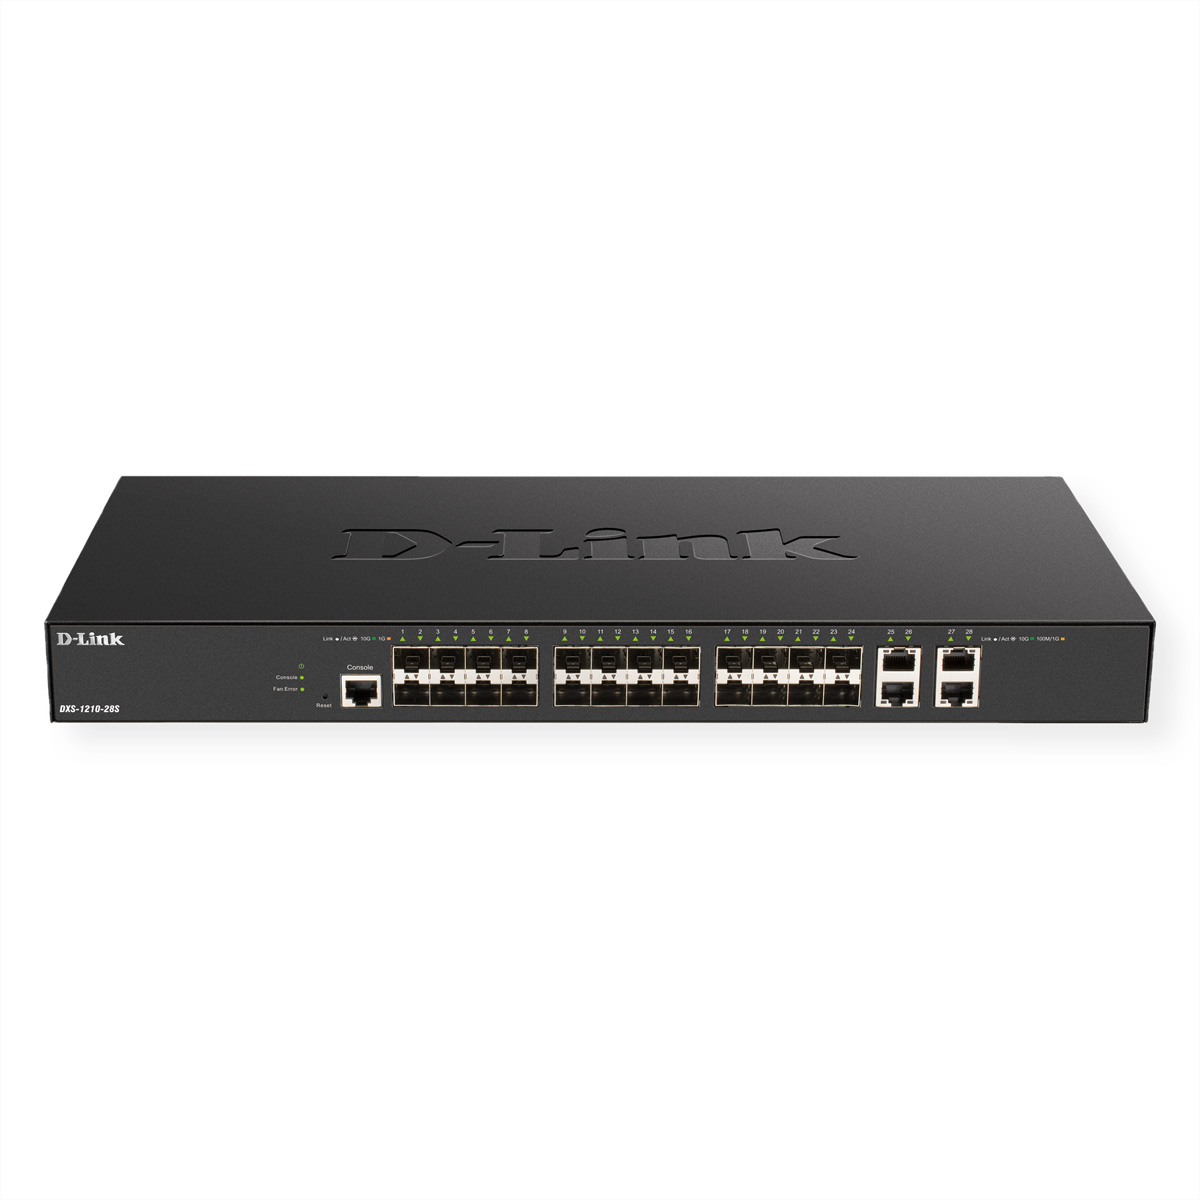 Base-T 10G 4 Switch DXS-1210-28S Switch Managed + x Ports Gigabit SFP+ Ethernet D-LINK 24x Smart 10G